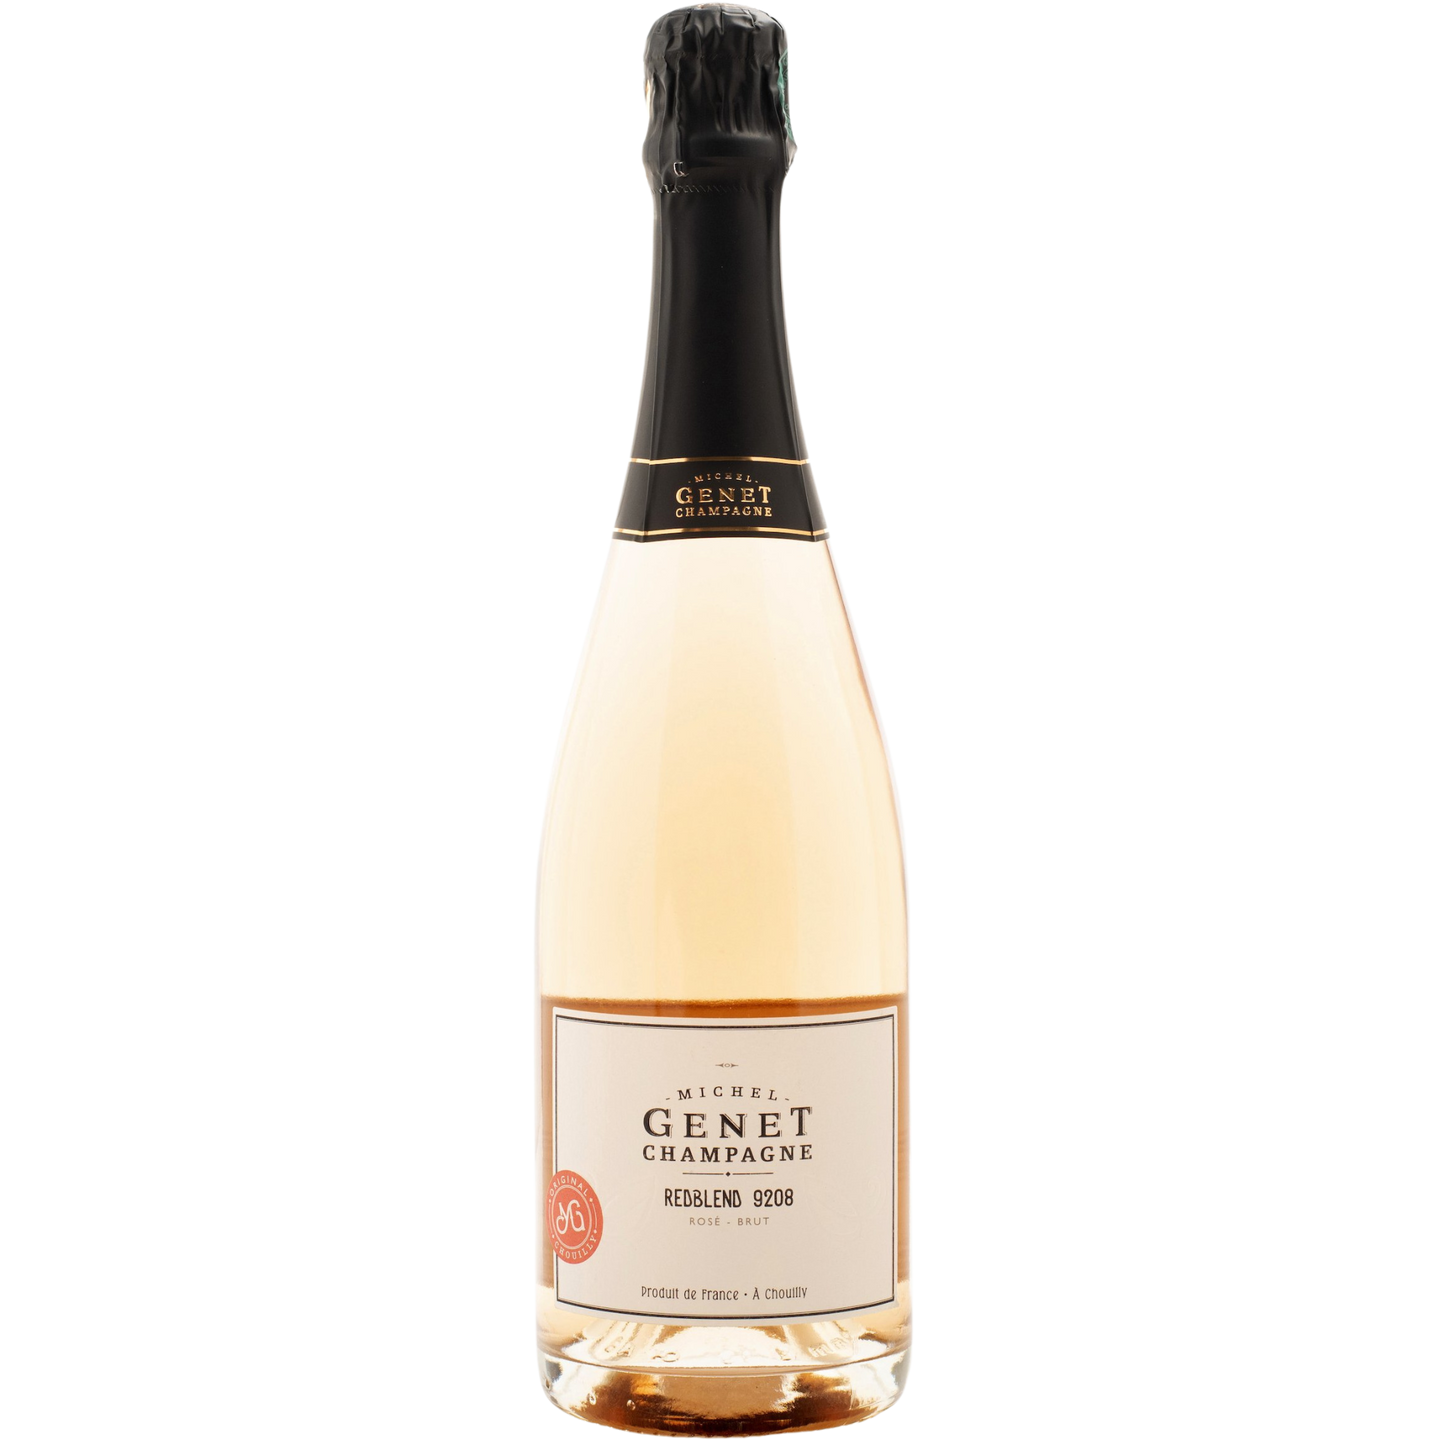 Michel Genet 'Redblend 9208' Brut Rosé Champagne NV